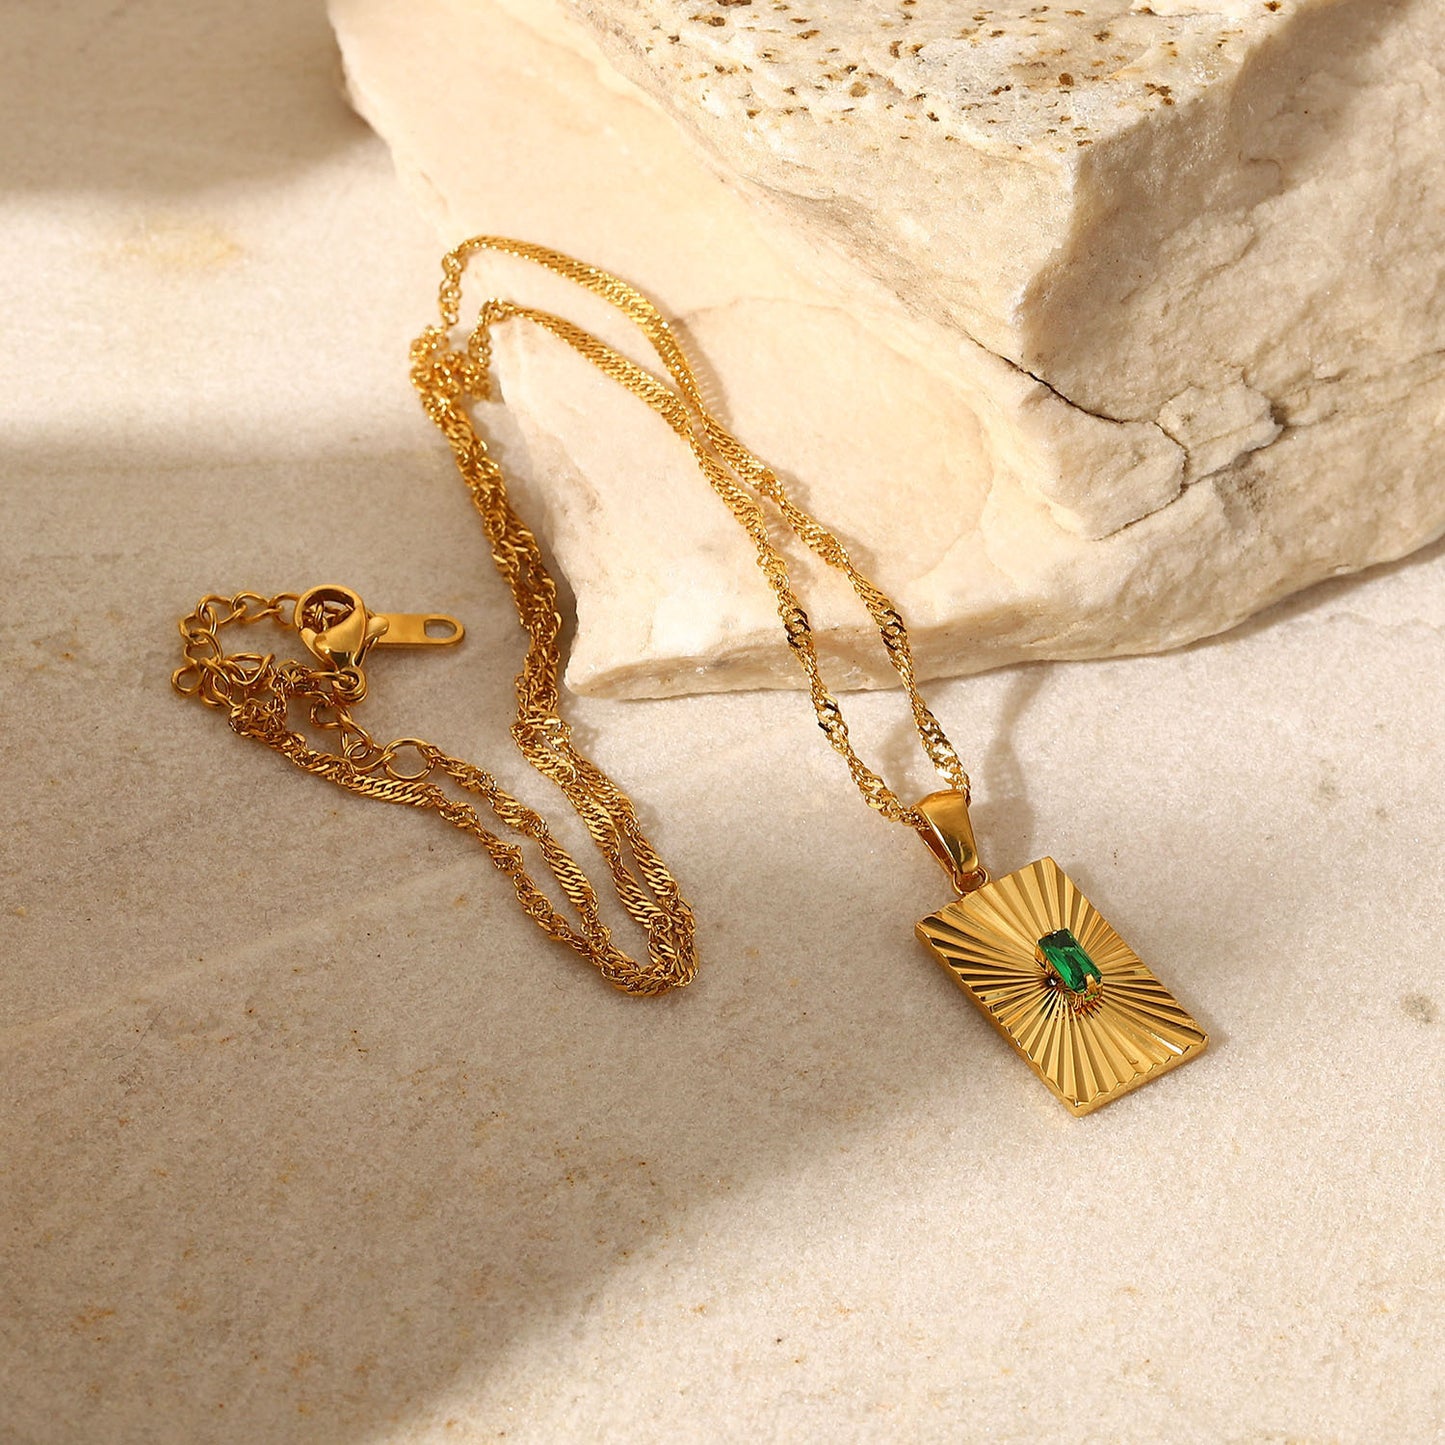 18 Karat Gold Exquisite Vintage Intarsien Smaragd Zirkon Split Blume Rechteckige Design Anhänger Halskette